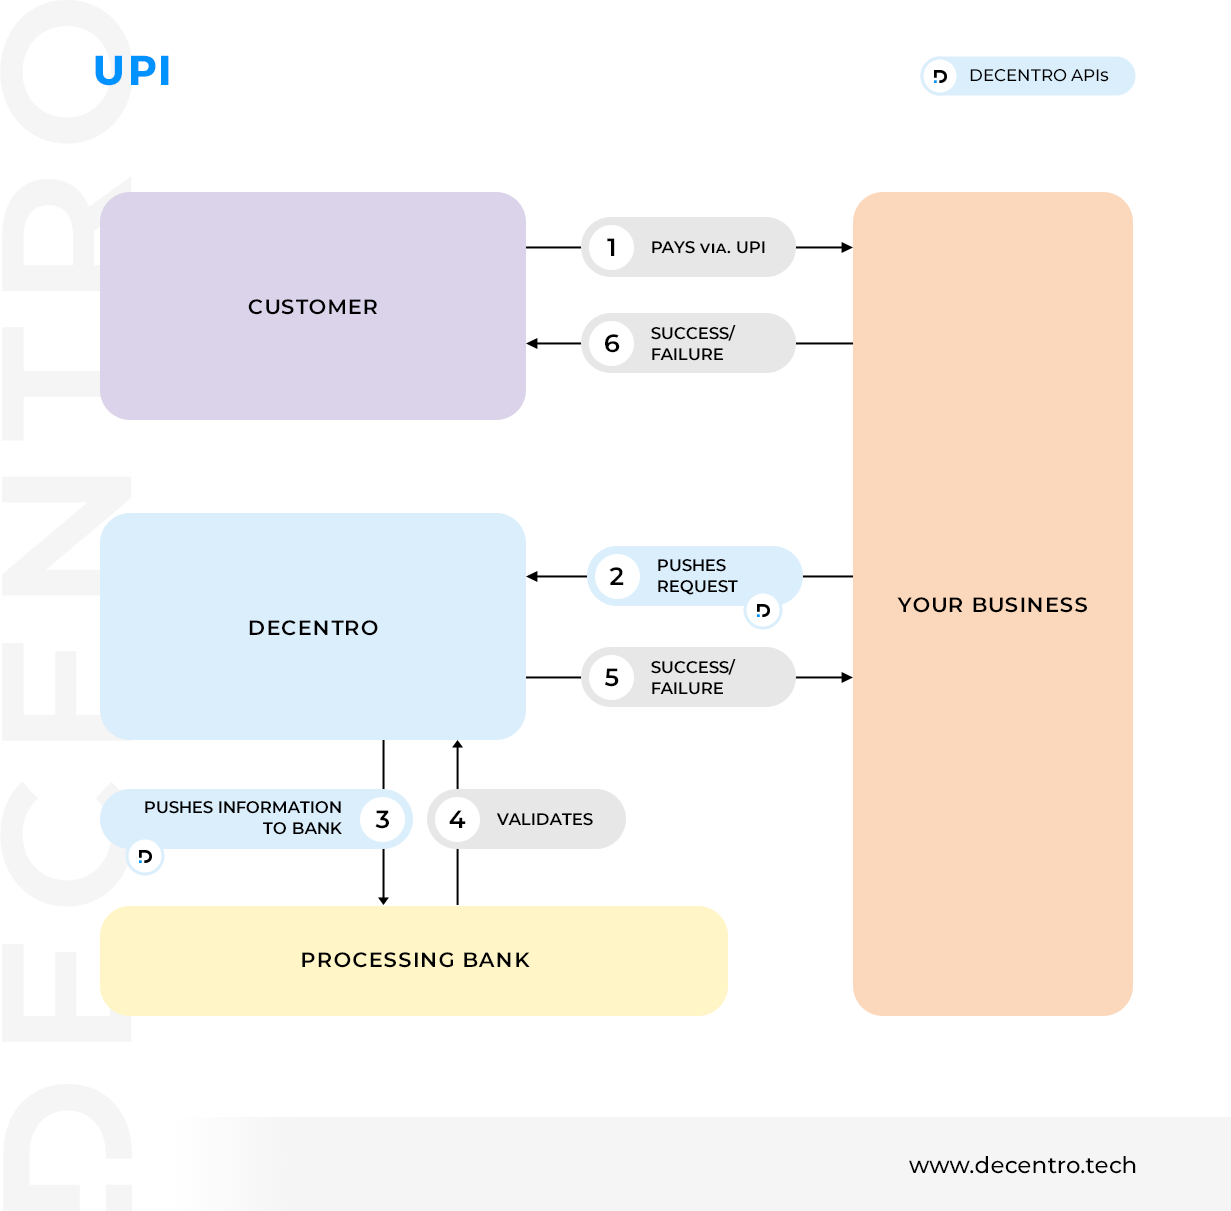 Decentro's UPI Workflow